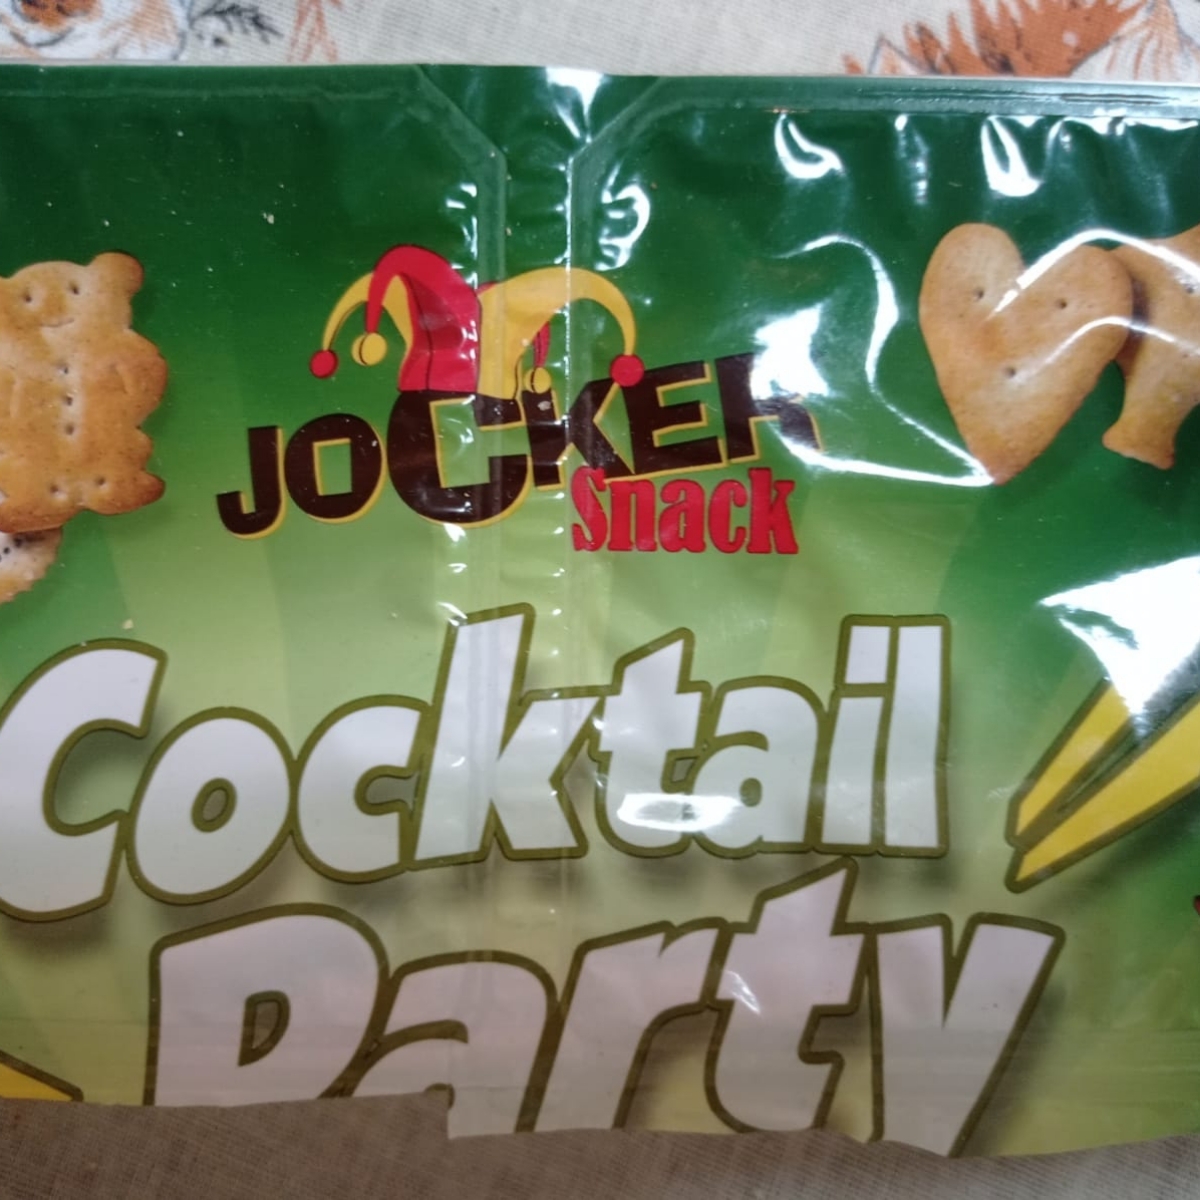 JOCKER Snack Joker Snack Cocktail Party Reviews | abillion